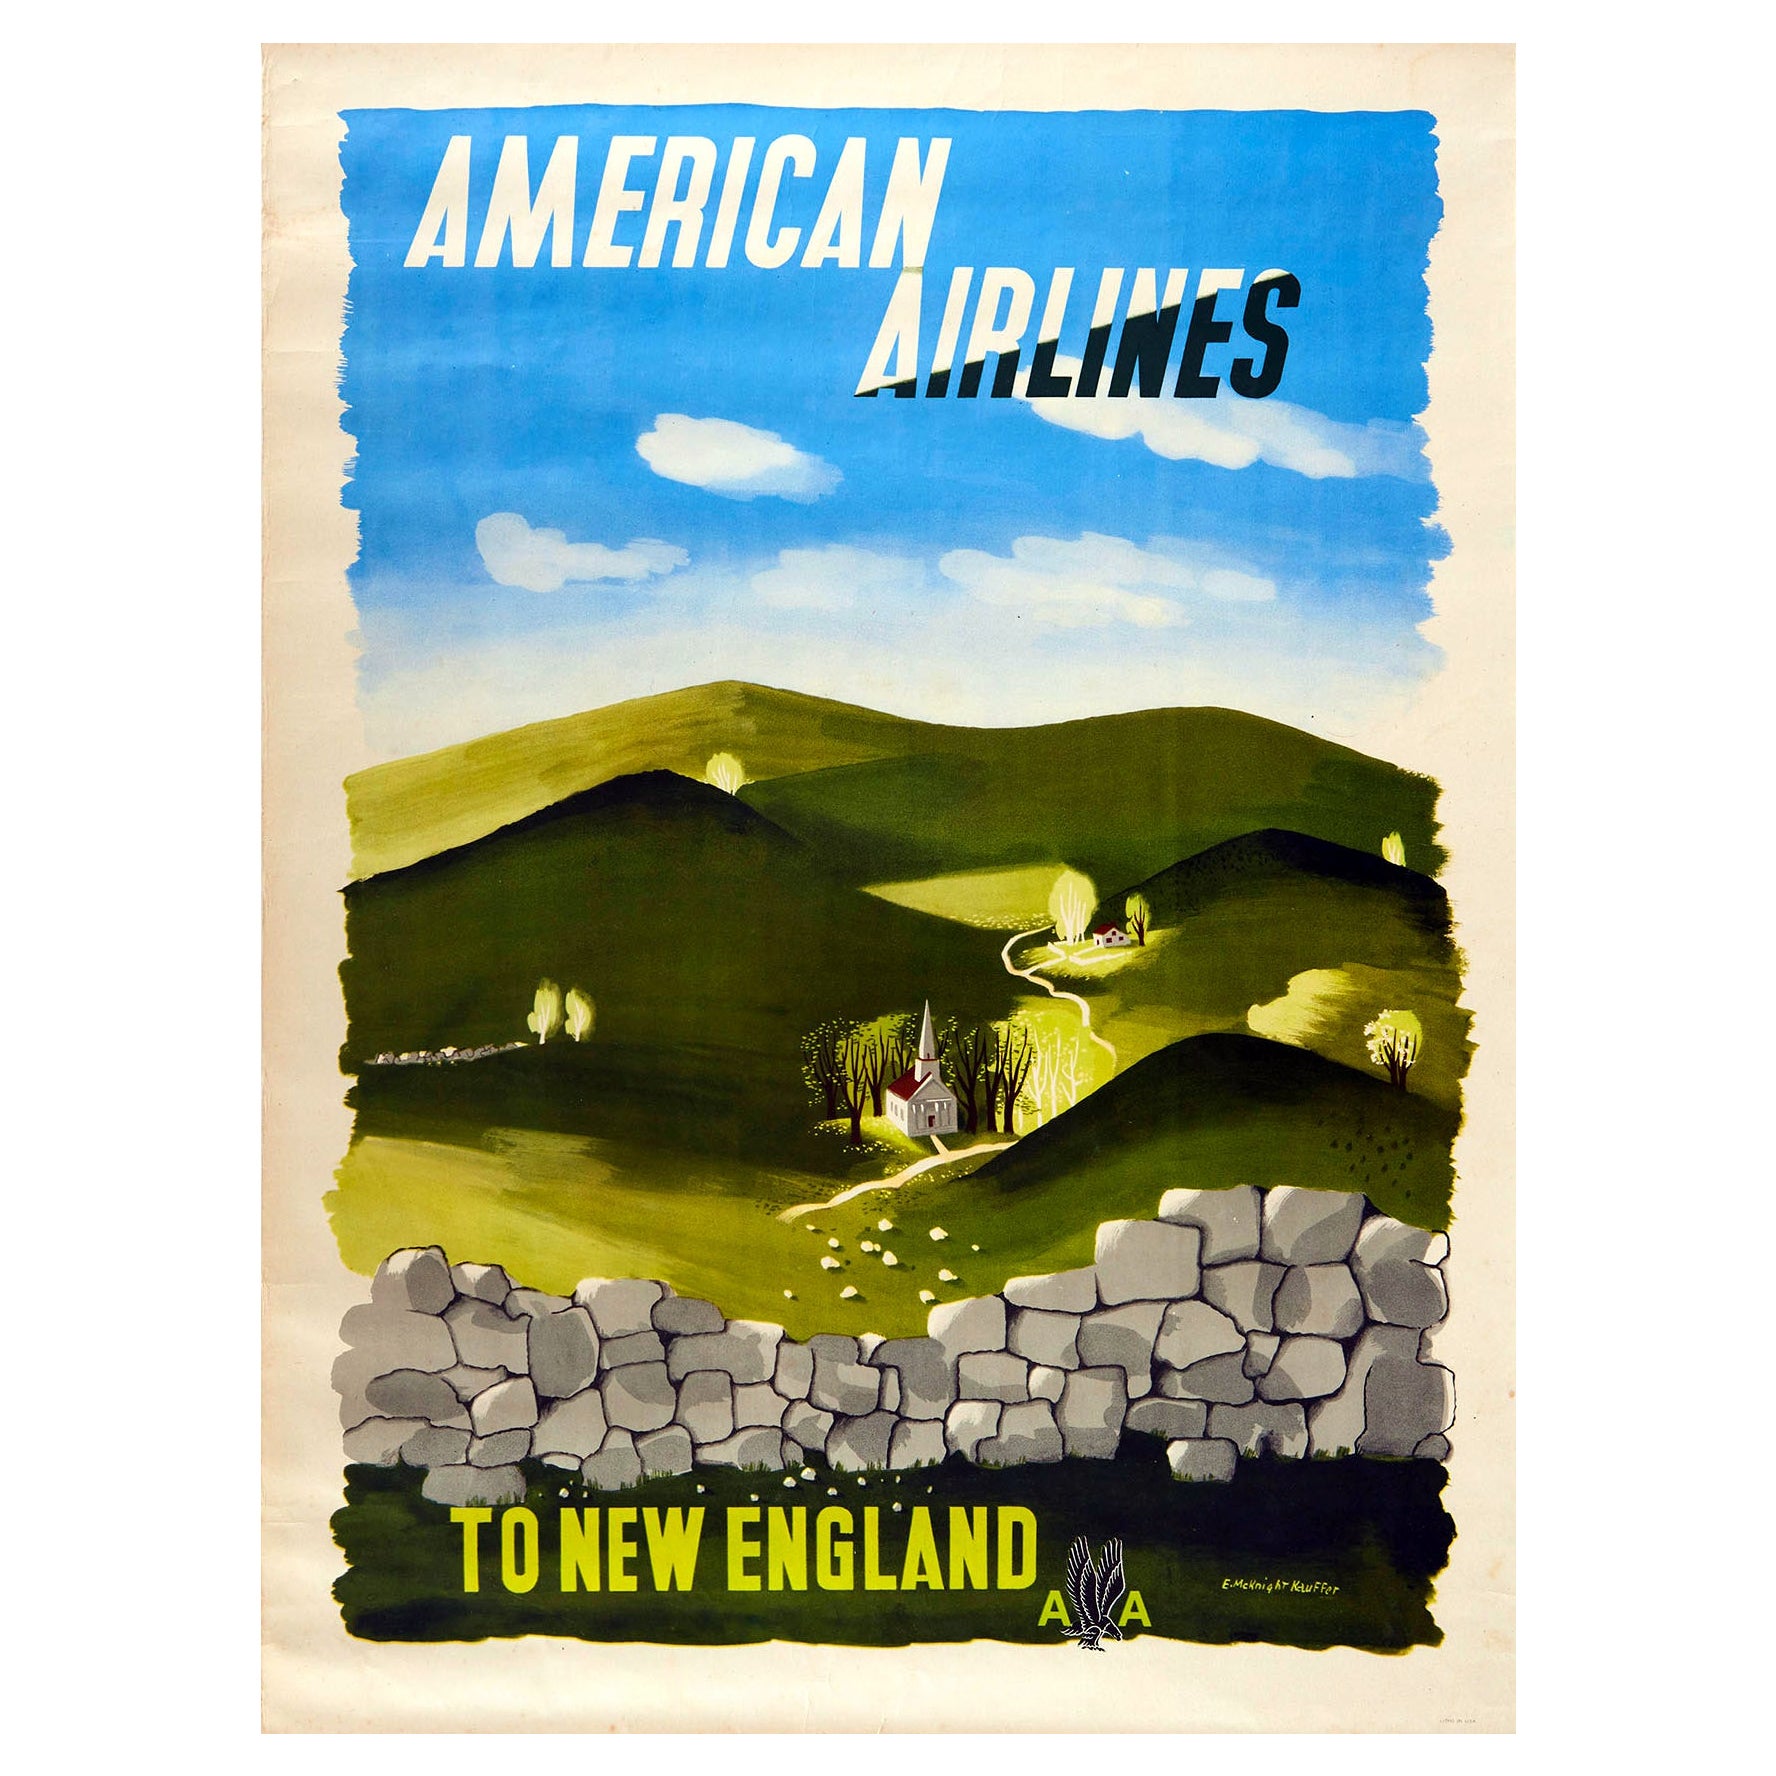 Affiche de voyage originale vintage - American Airlines To New England - McKnight Kauffer